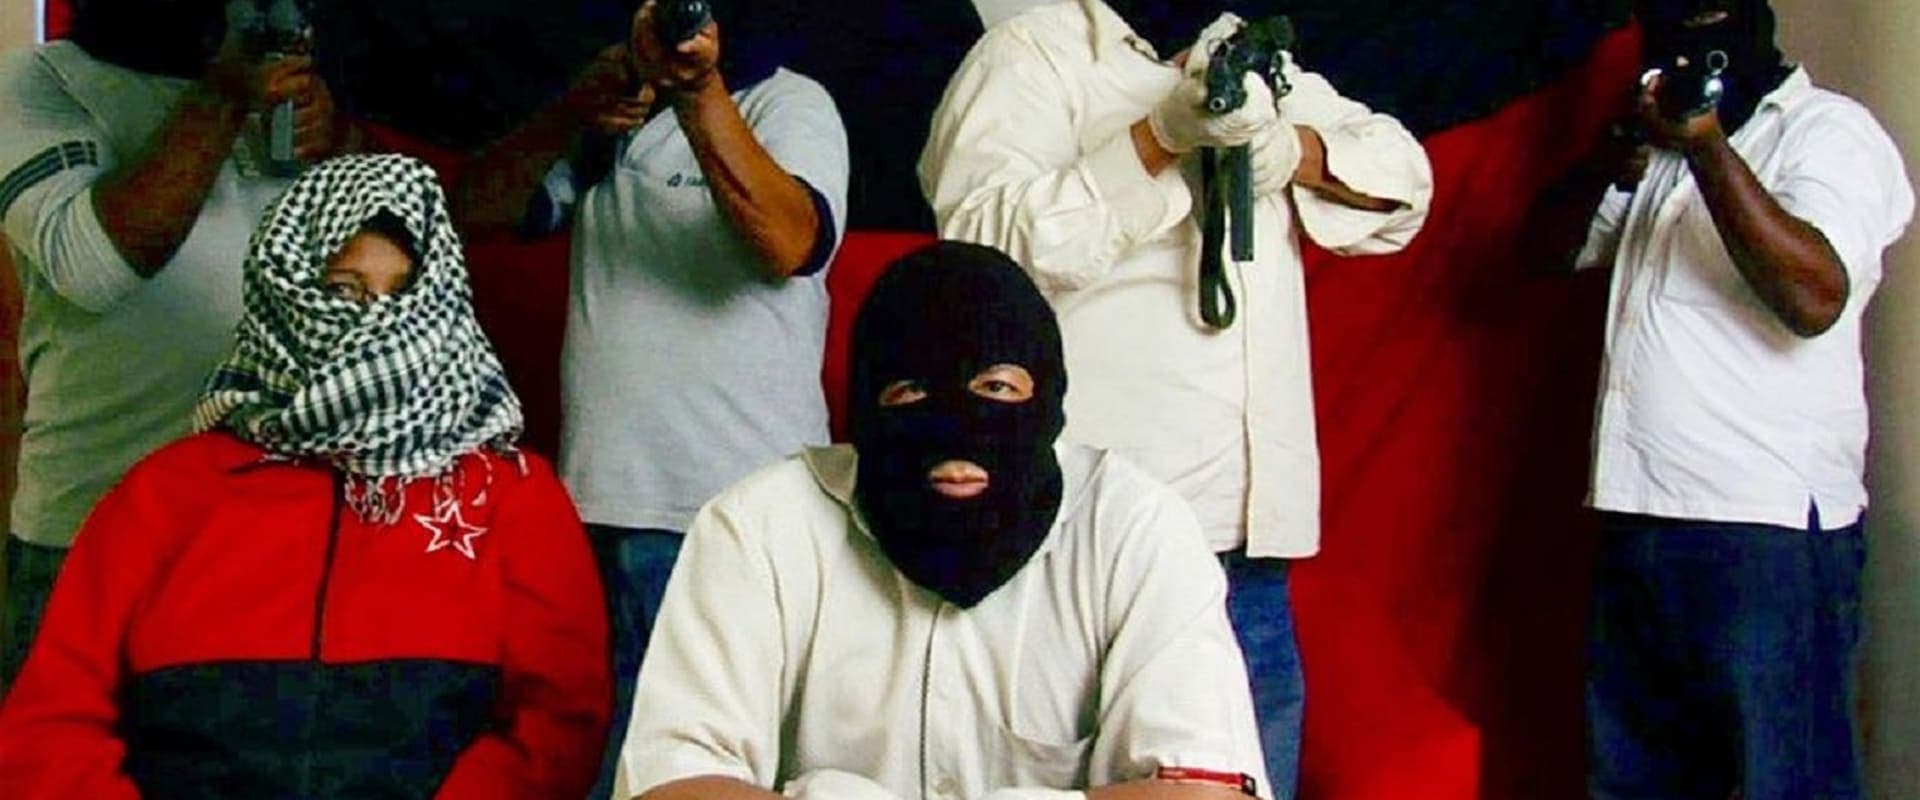 Tupamaro: Urban Guerrillas